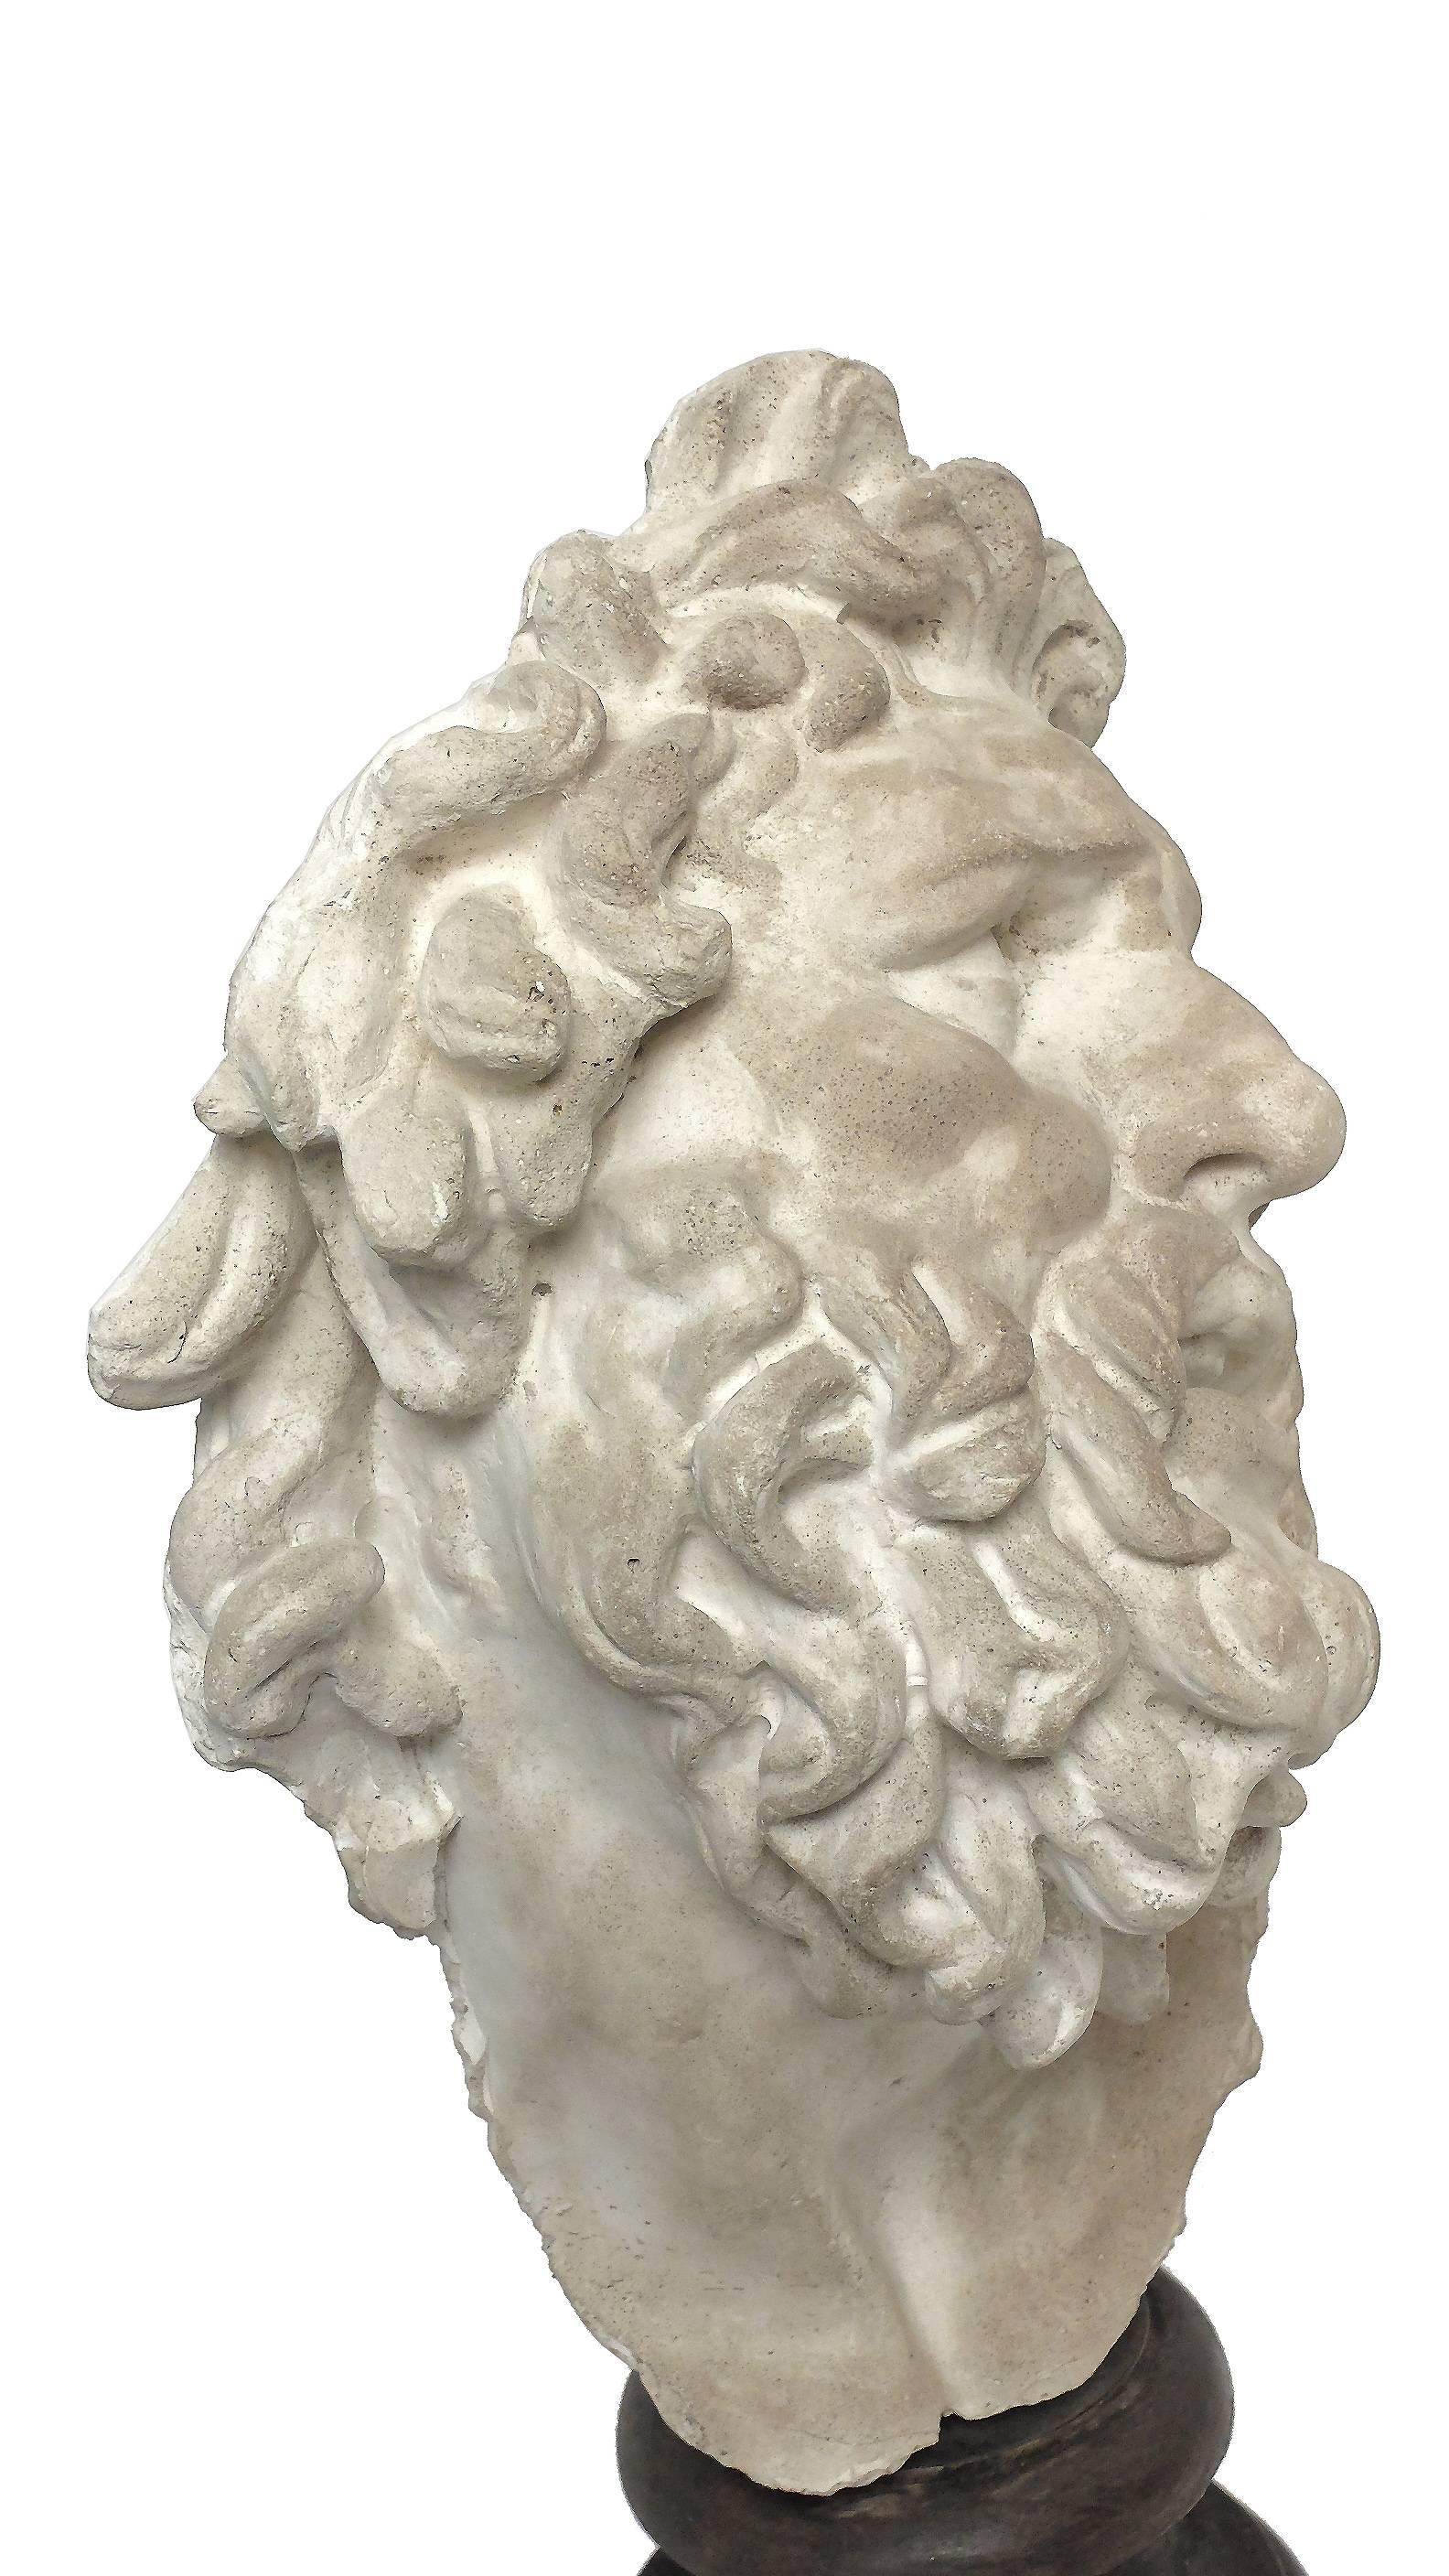 Italian Academic Cast of Plaster Depicting Laocoonte's Head